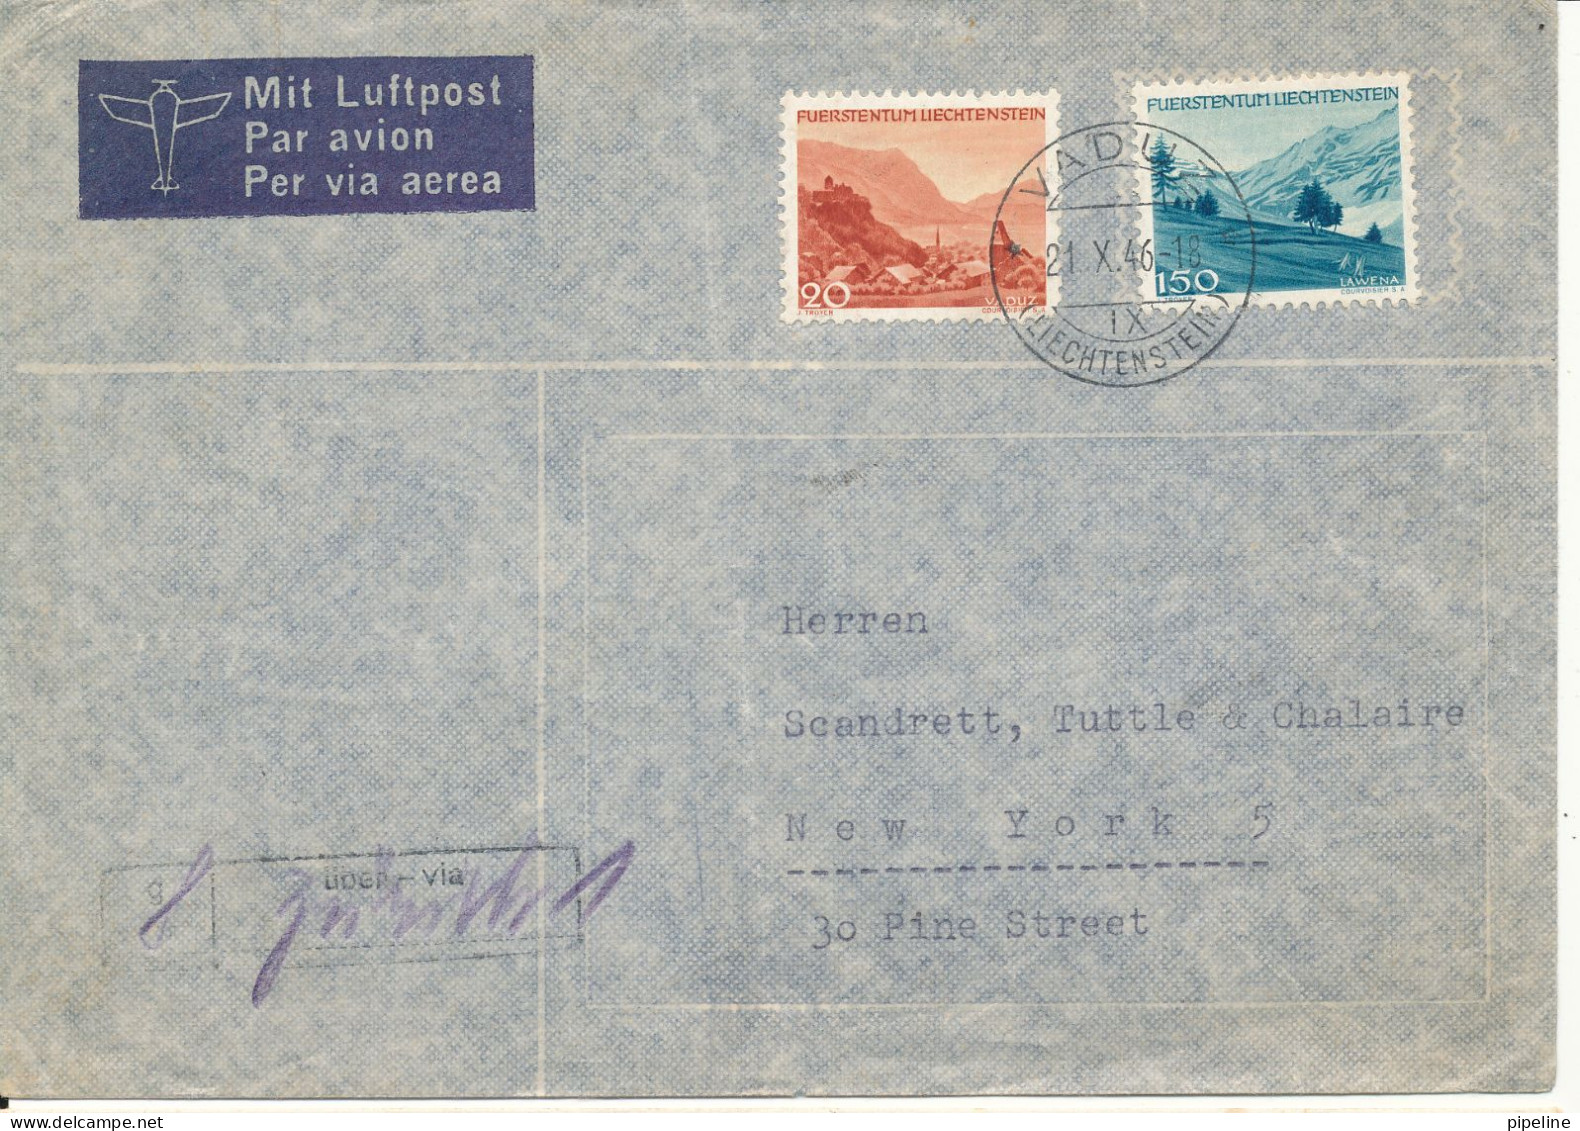 Liechtenstein Air Mail Cover Sent To USA 21-10-1946 Very Good Franked - Posta Aerea